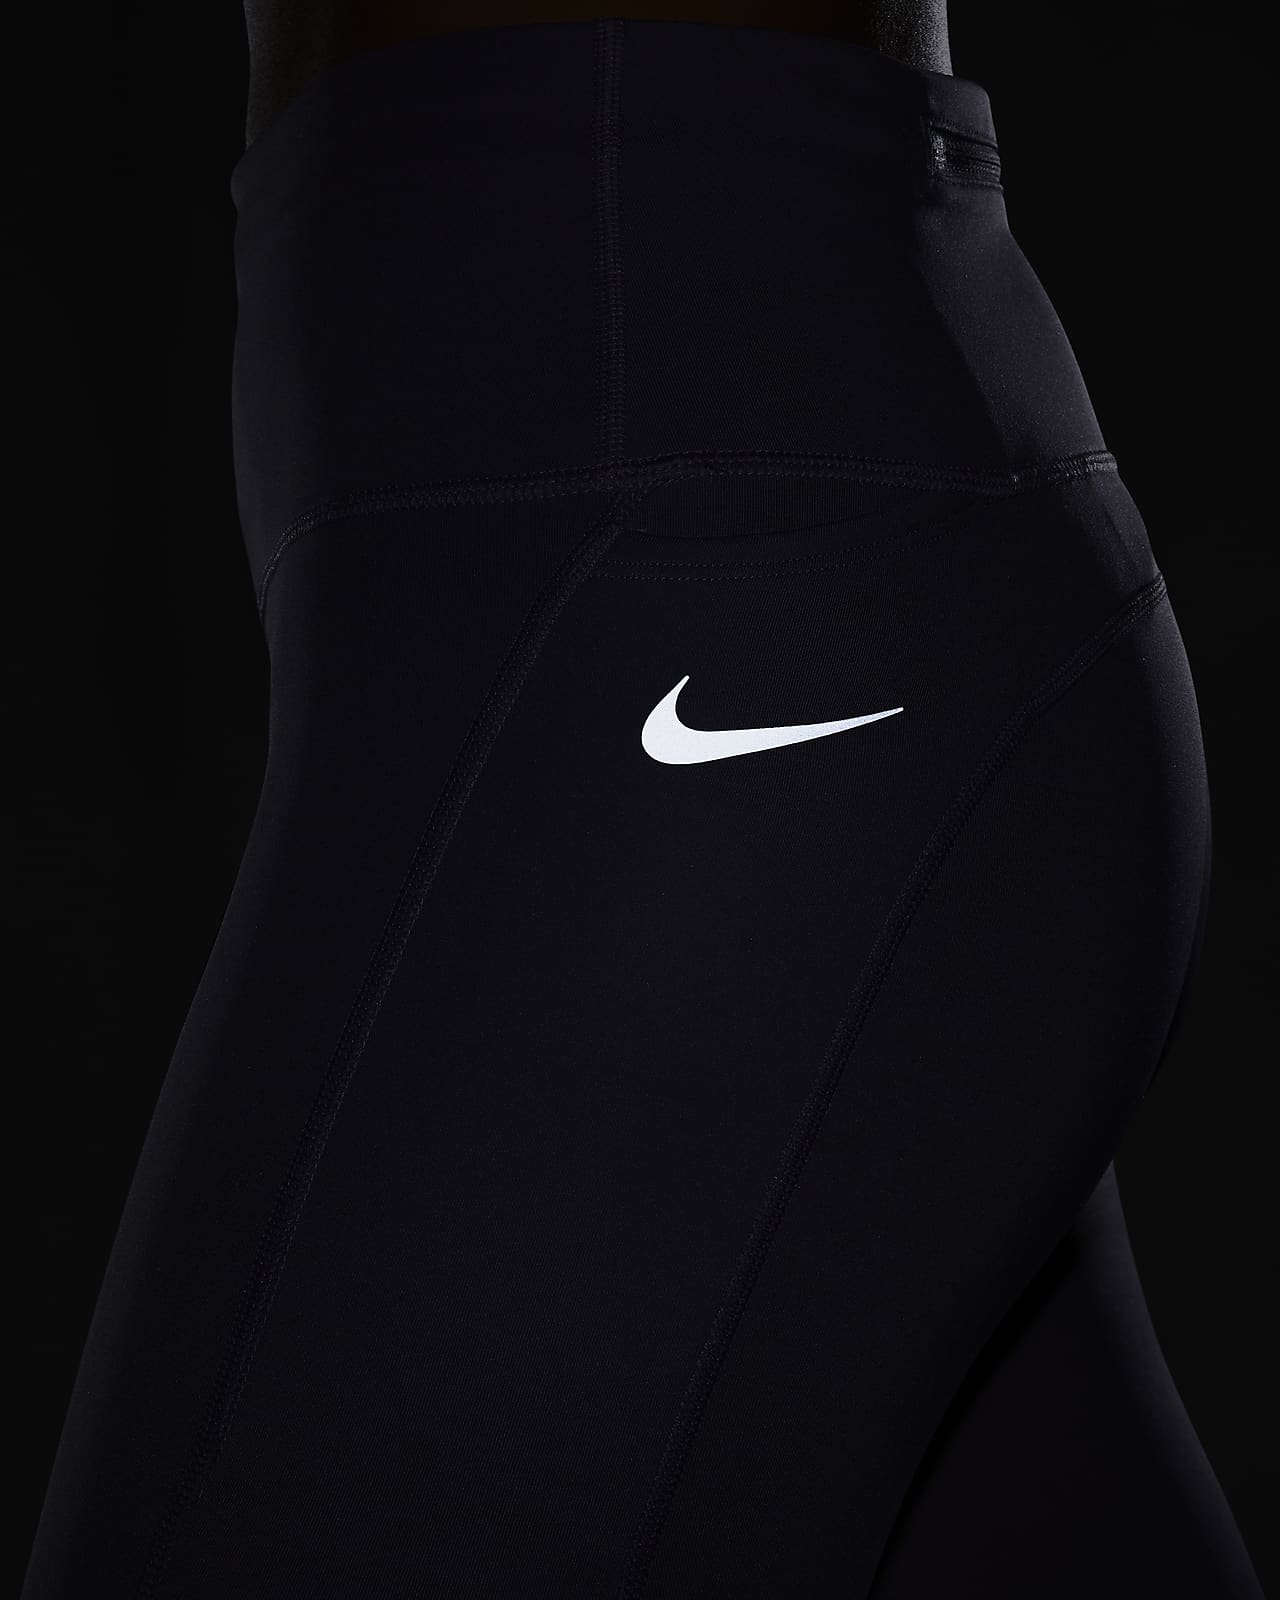 Mid-Thigh Length Yoga Underwear. Nike JP